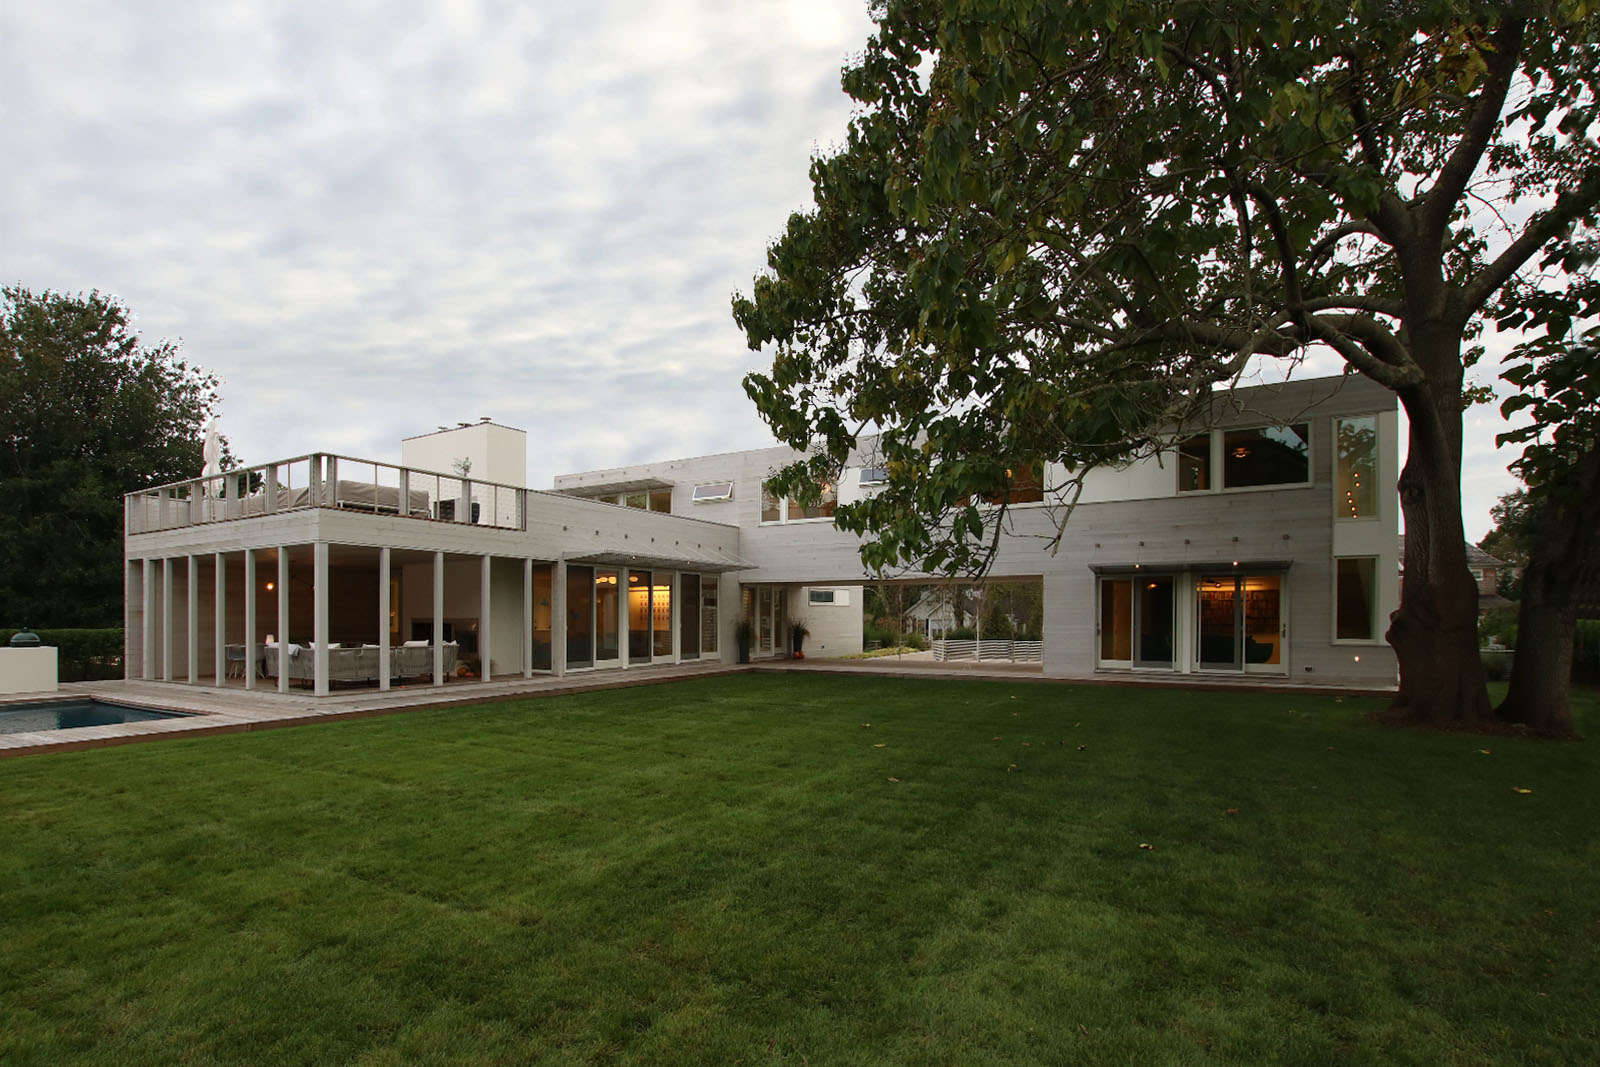 10-re4a-resolution-4-architecture-modern-modular-prefab-bridgehampton house-exterior-dusk-2.jpg